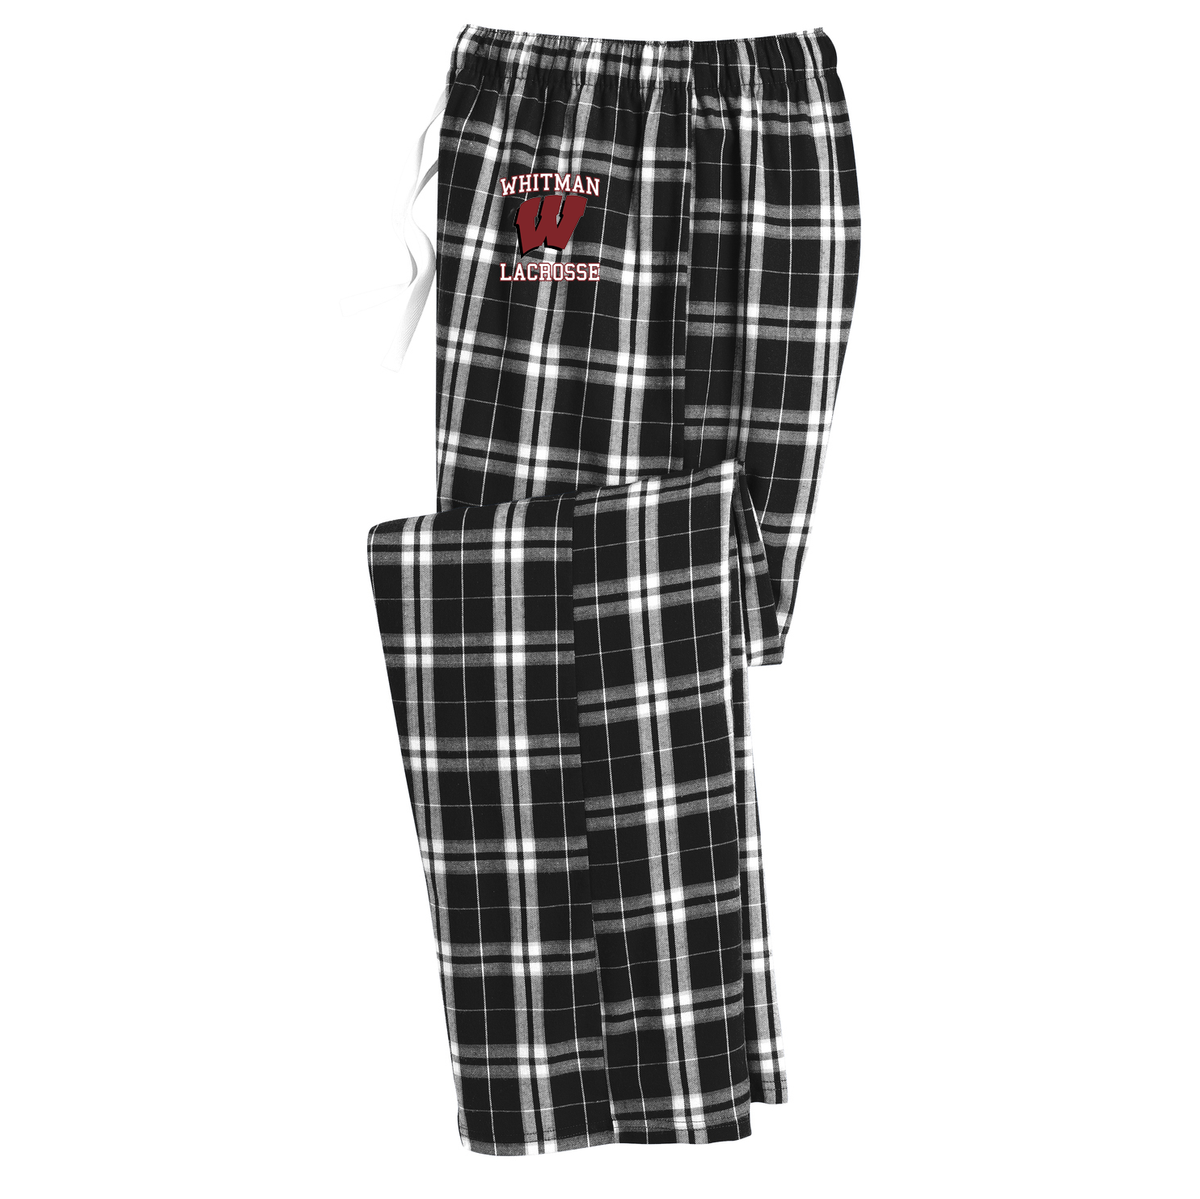 Whitman Lacrosse Plaid Pajama Pants